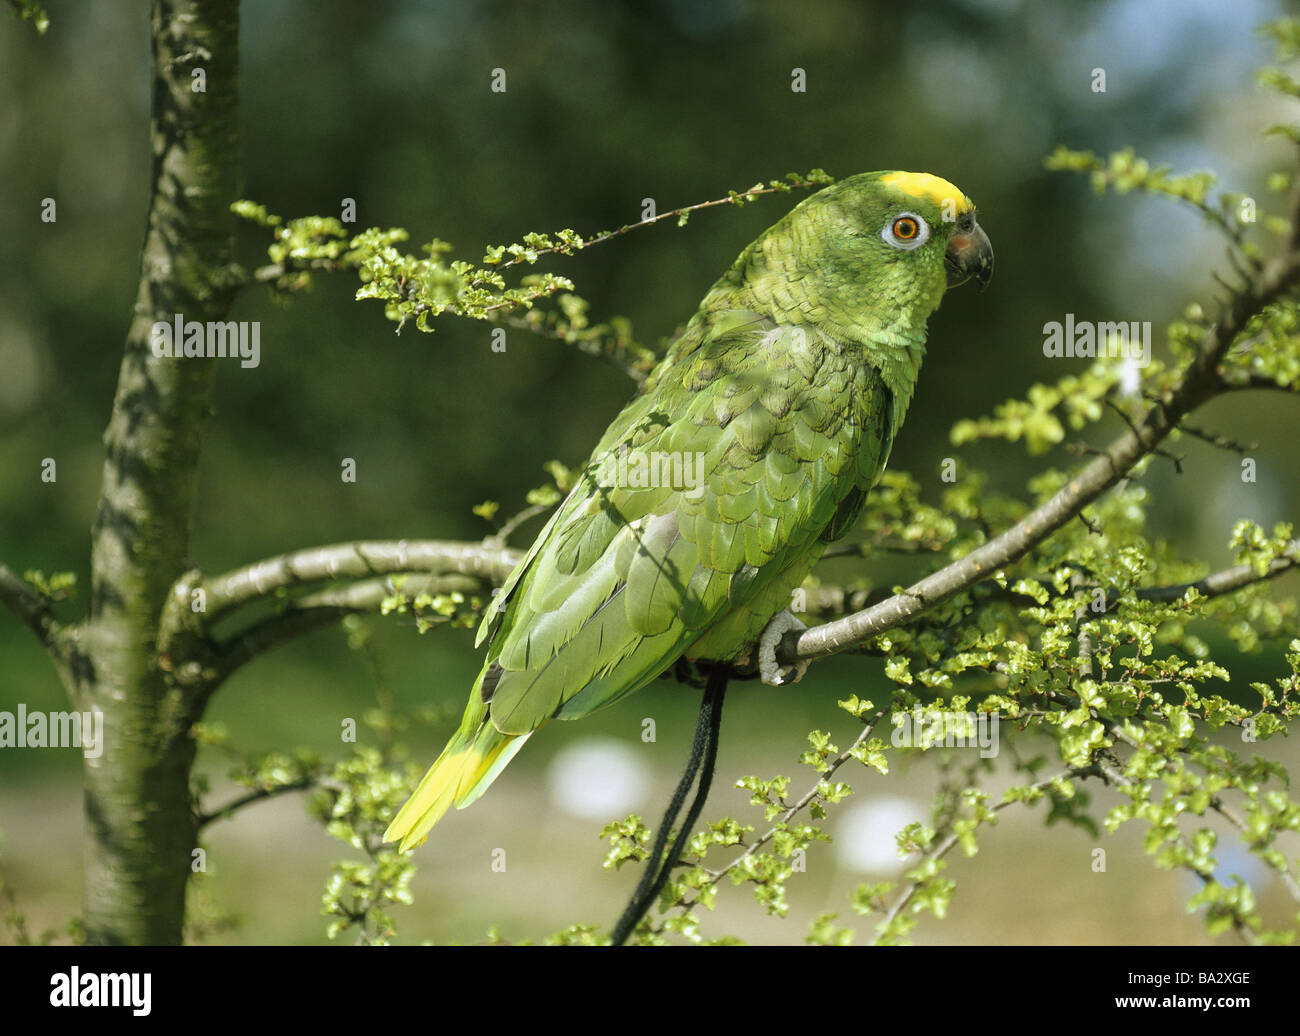 Shrub yellow-head-Amazon Amazona ochrocephala belizensis wildlife animal bird parrot Amazon plumages green yellow exotic Stock Photo